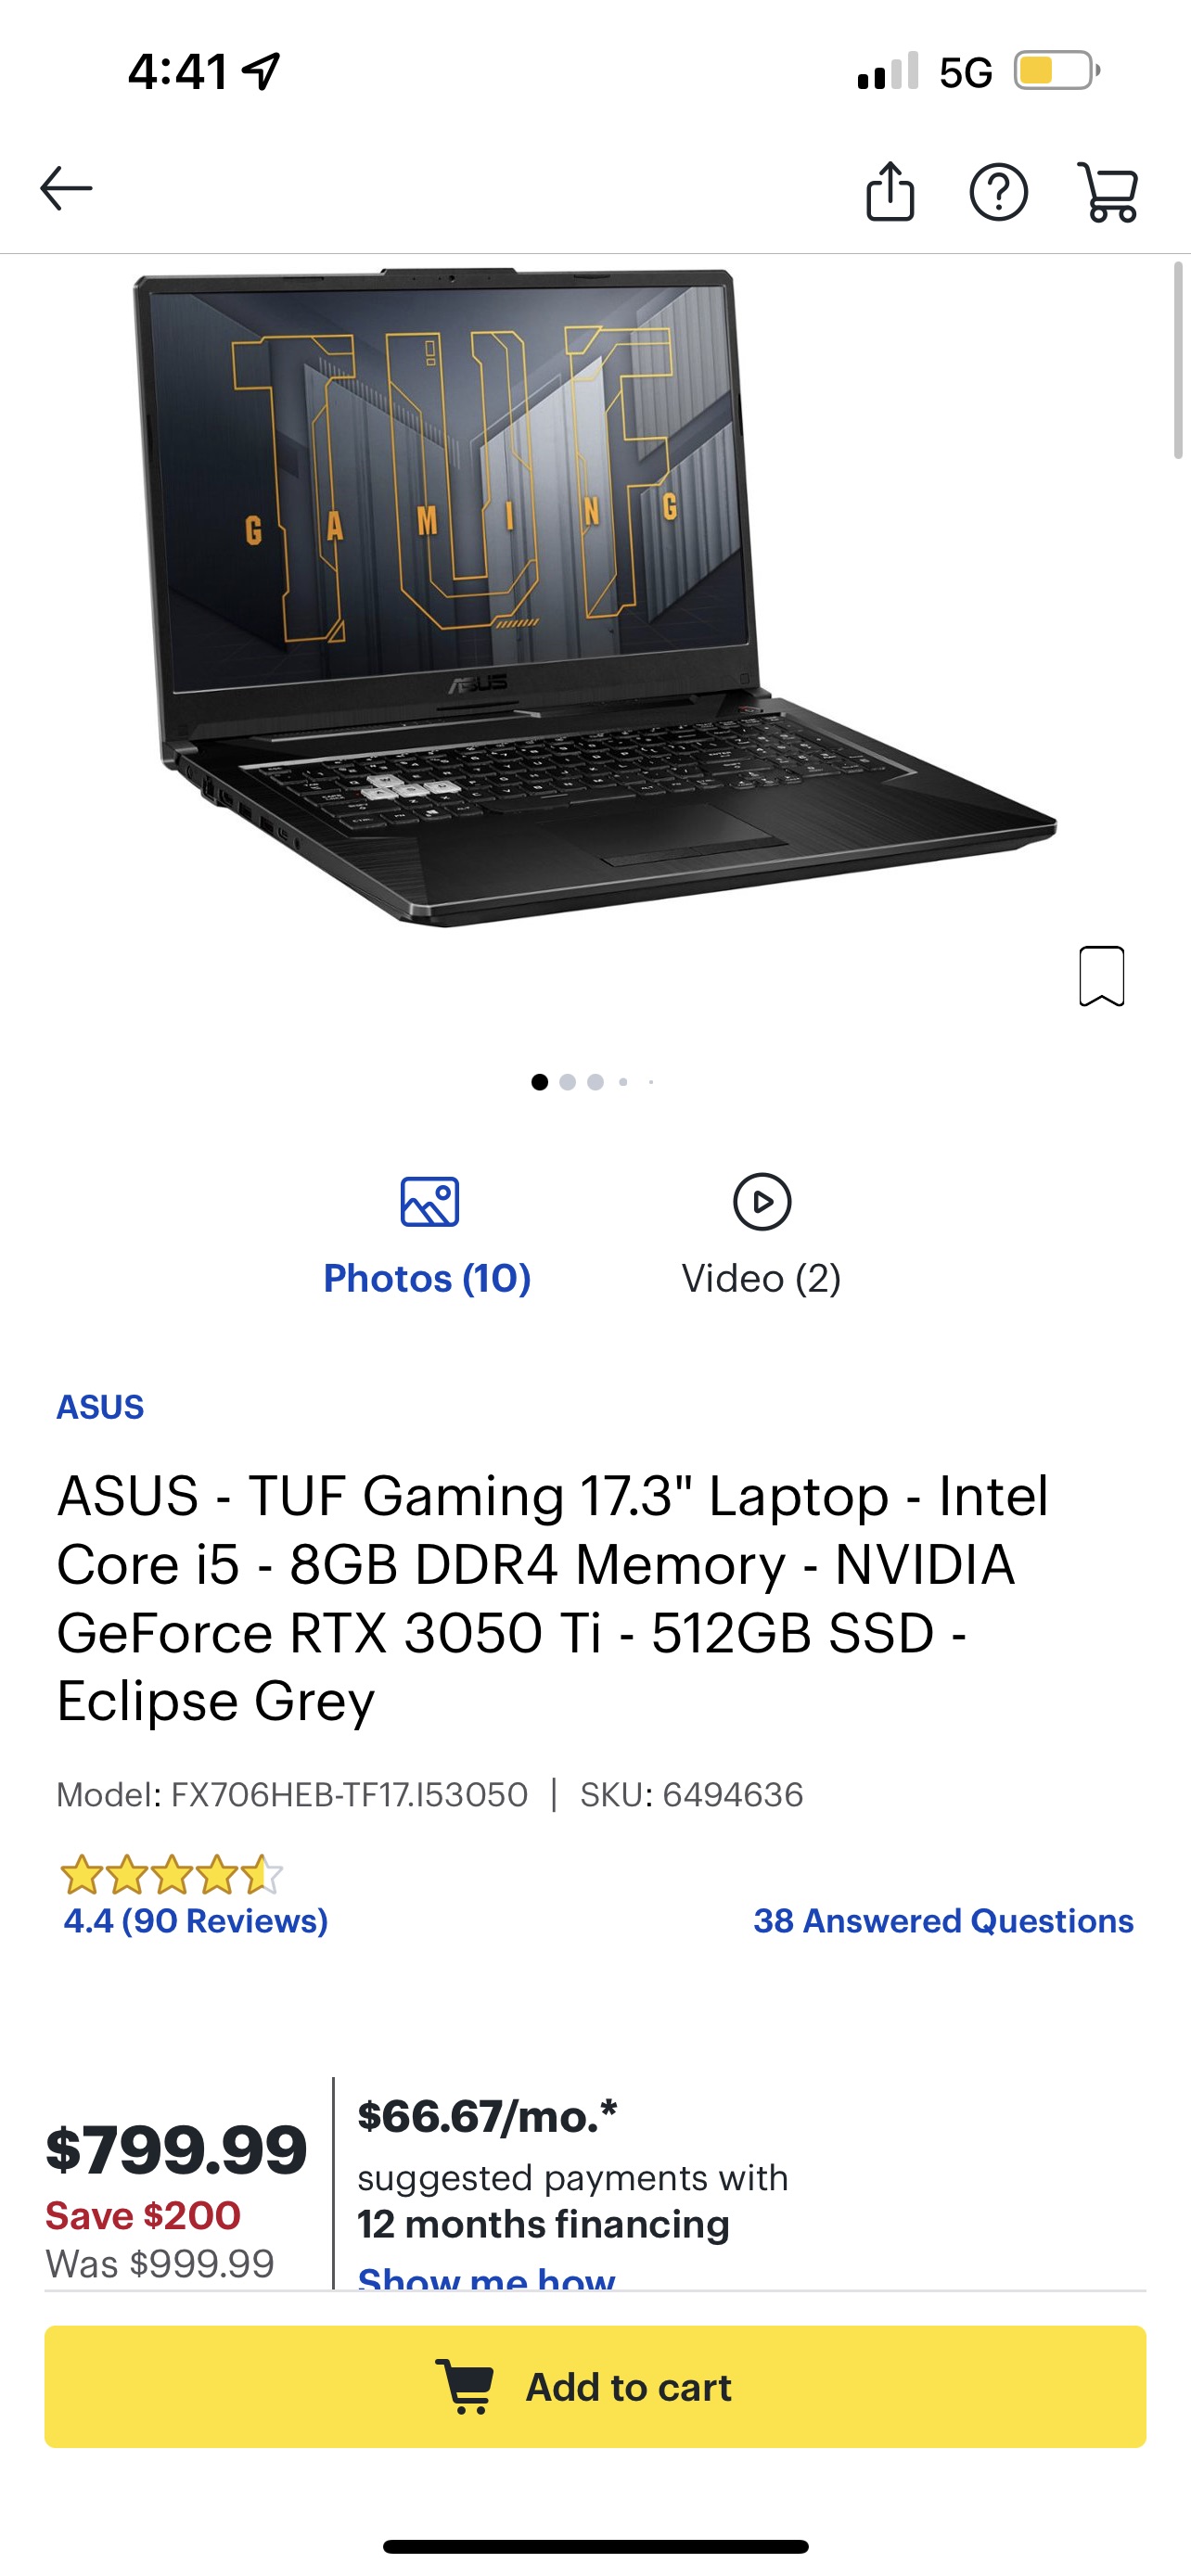 ASUS TUF Gaming 17.3" Laptop Intel Core i5 8GB DDR4 Memory NVIDIA GeForce RTX 3050 Ti 512GB SSD Eclipse Grey FX706HEB-TF17.I53050 - Best Buy